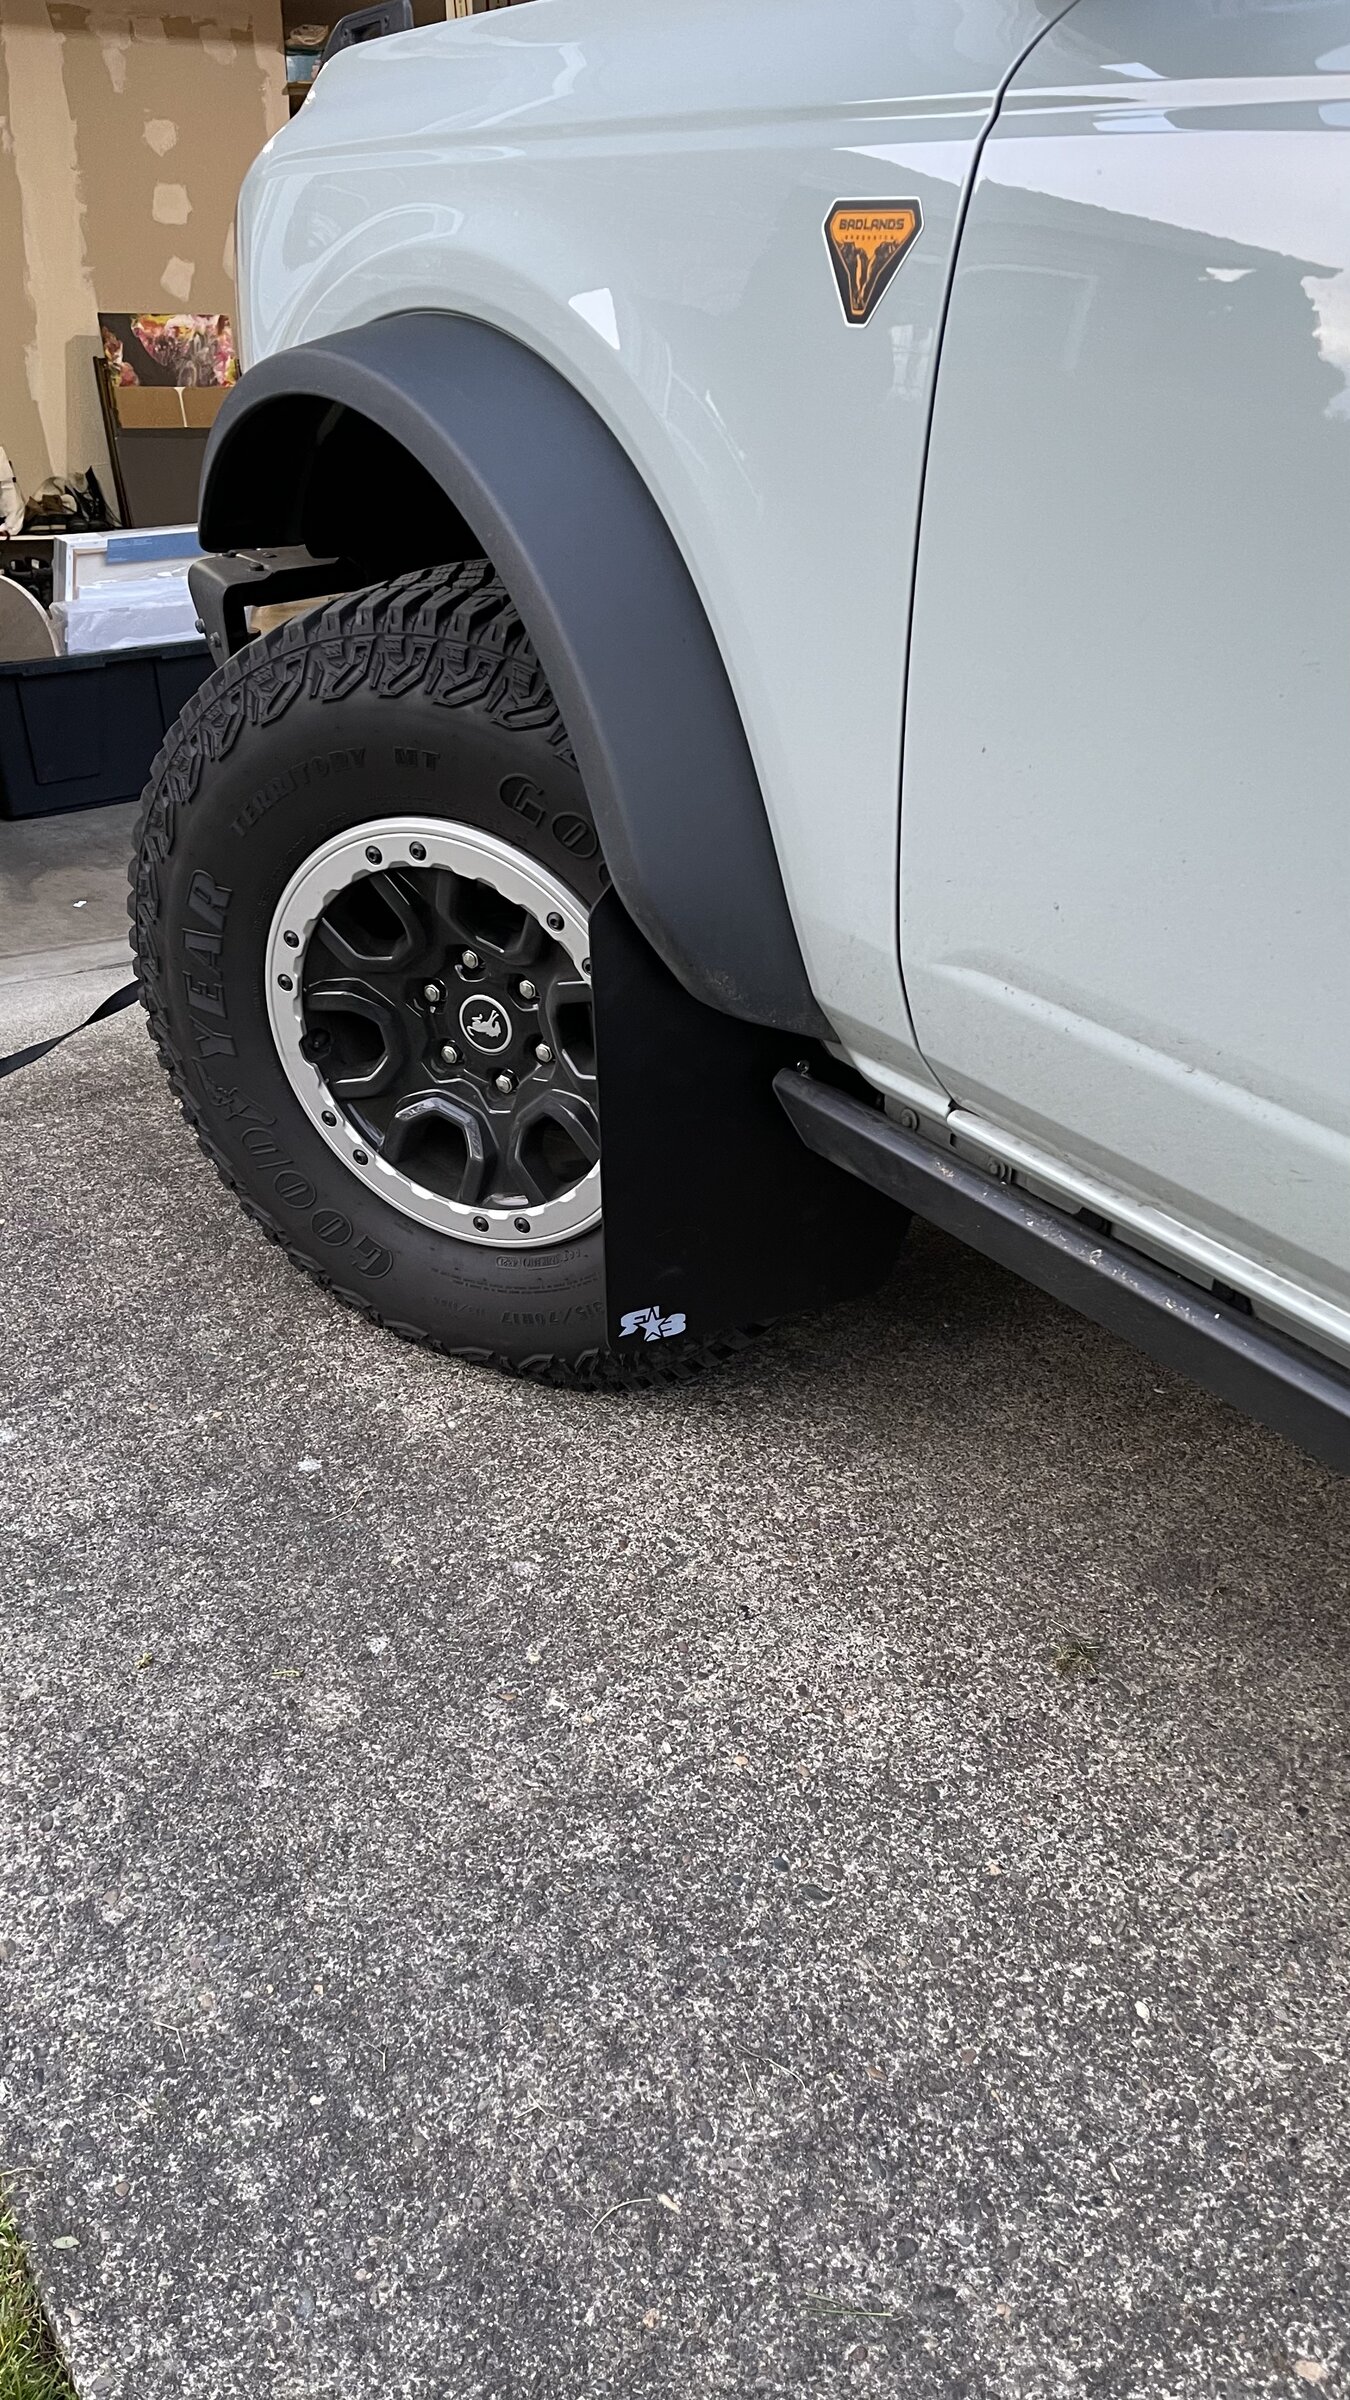 Ford Bronco Rokblokz mudflaps installed on Bronco 17B752B9-6D7D-4CC0-8455-E9BB762D3E2C